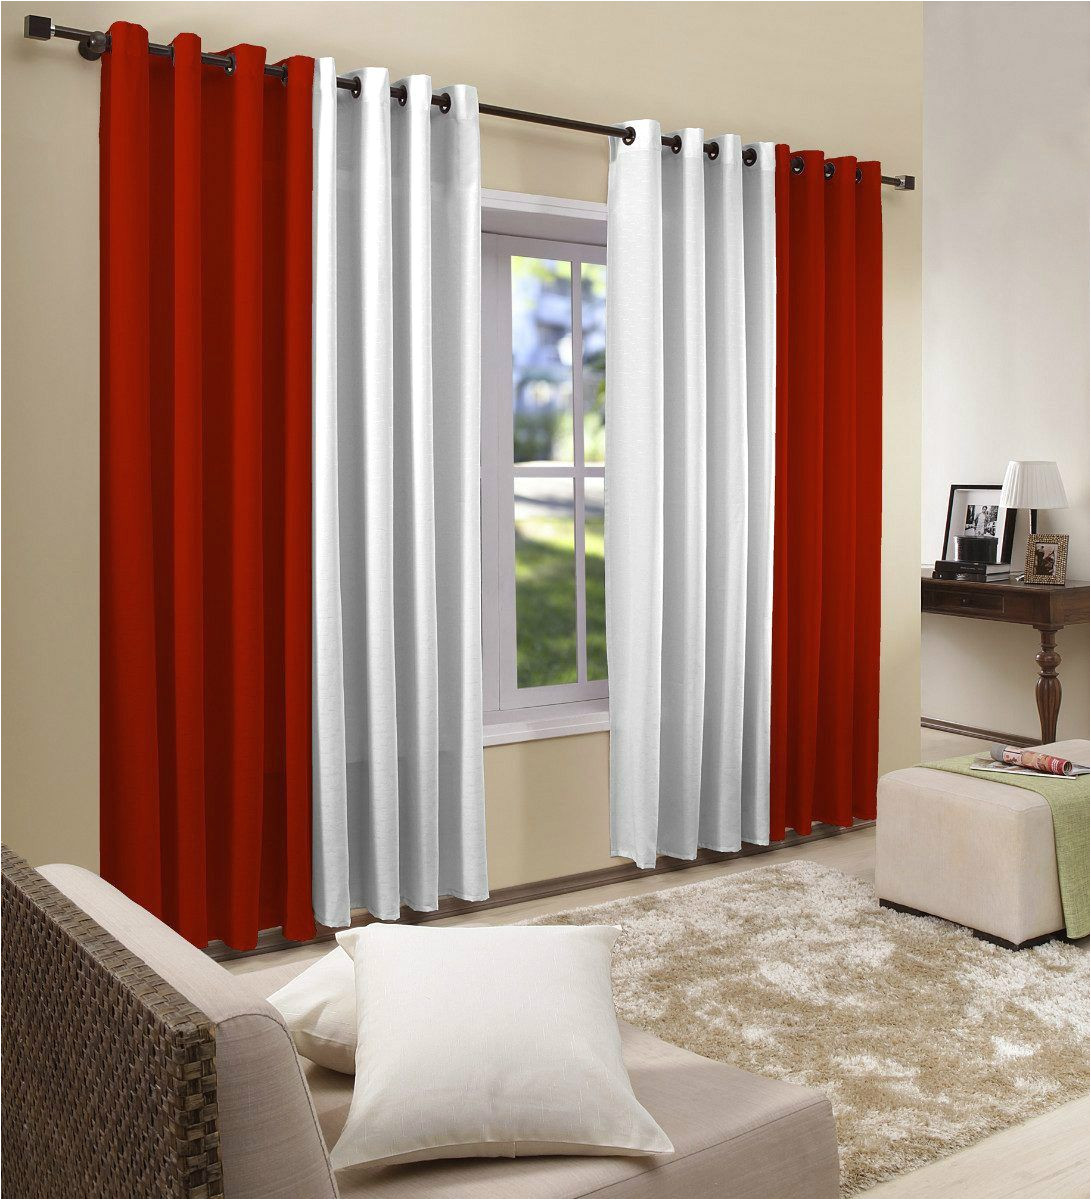 mejores 102 imagenes de cortina en pinterest curtains home y make curtains